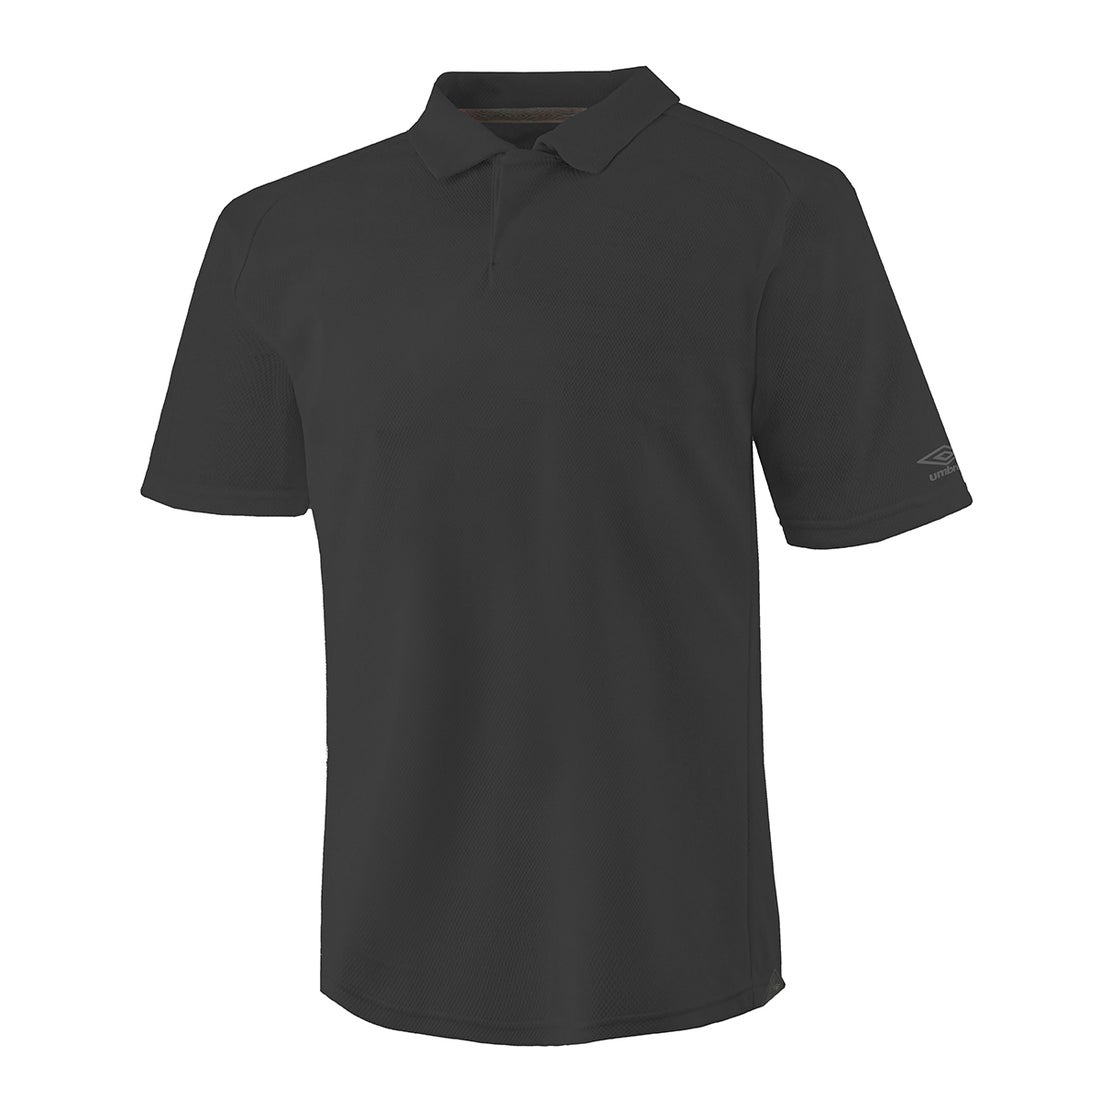 UMBRO アンブロ 半袖ポロシャツ(ブラック) UUURJA70 BLK カジュアルウェア -サッカーショップ【SWS】